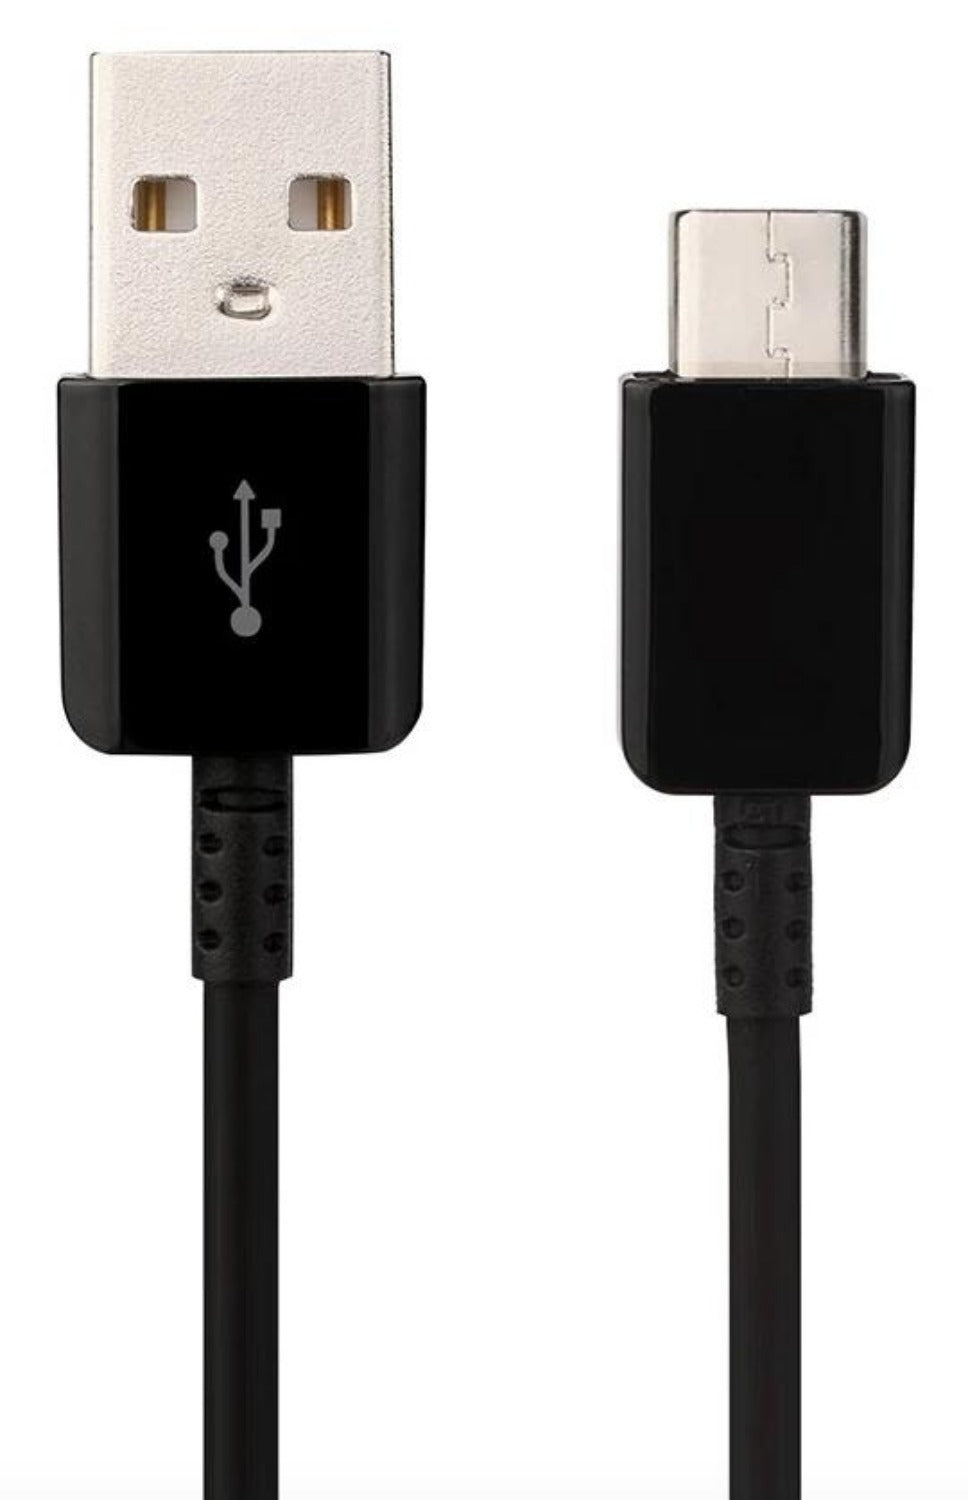 C-USB-T-C-BLK connector